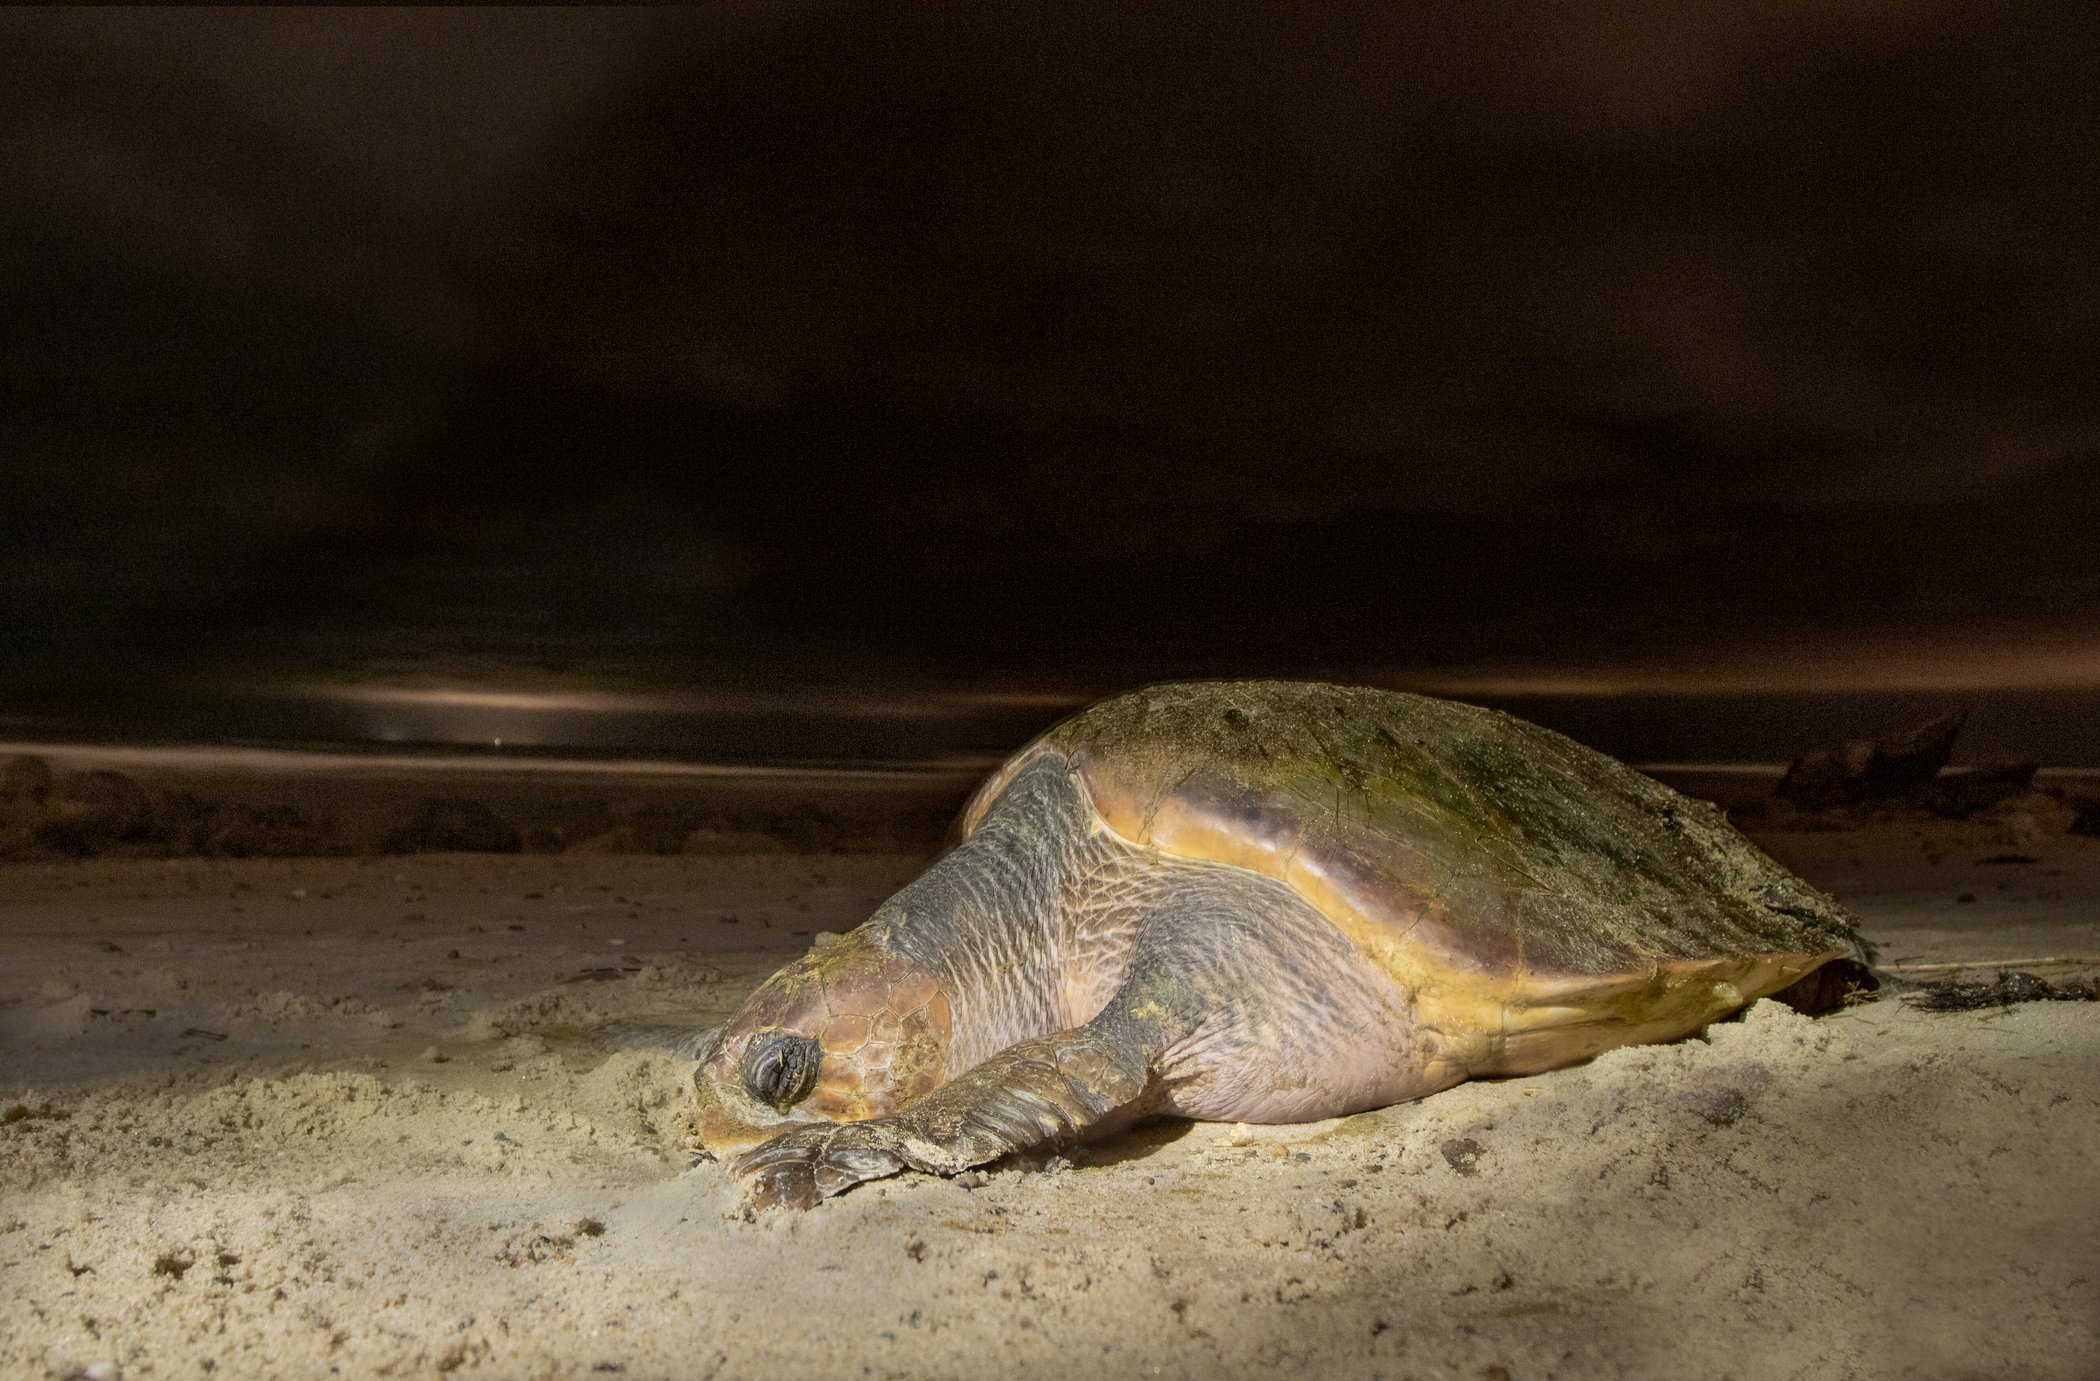 Loggerhead turtle on the beach at night